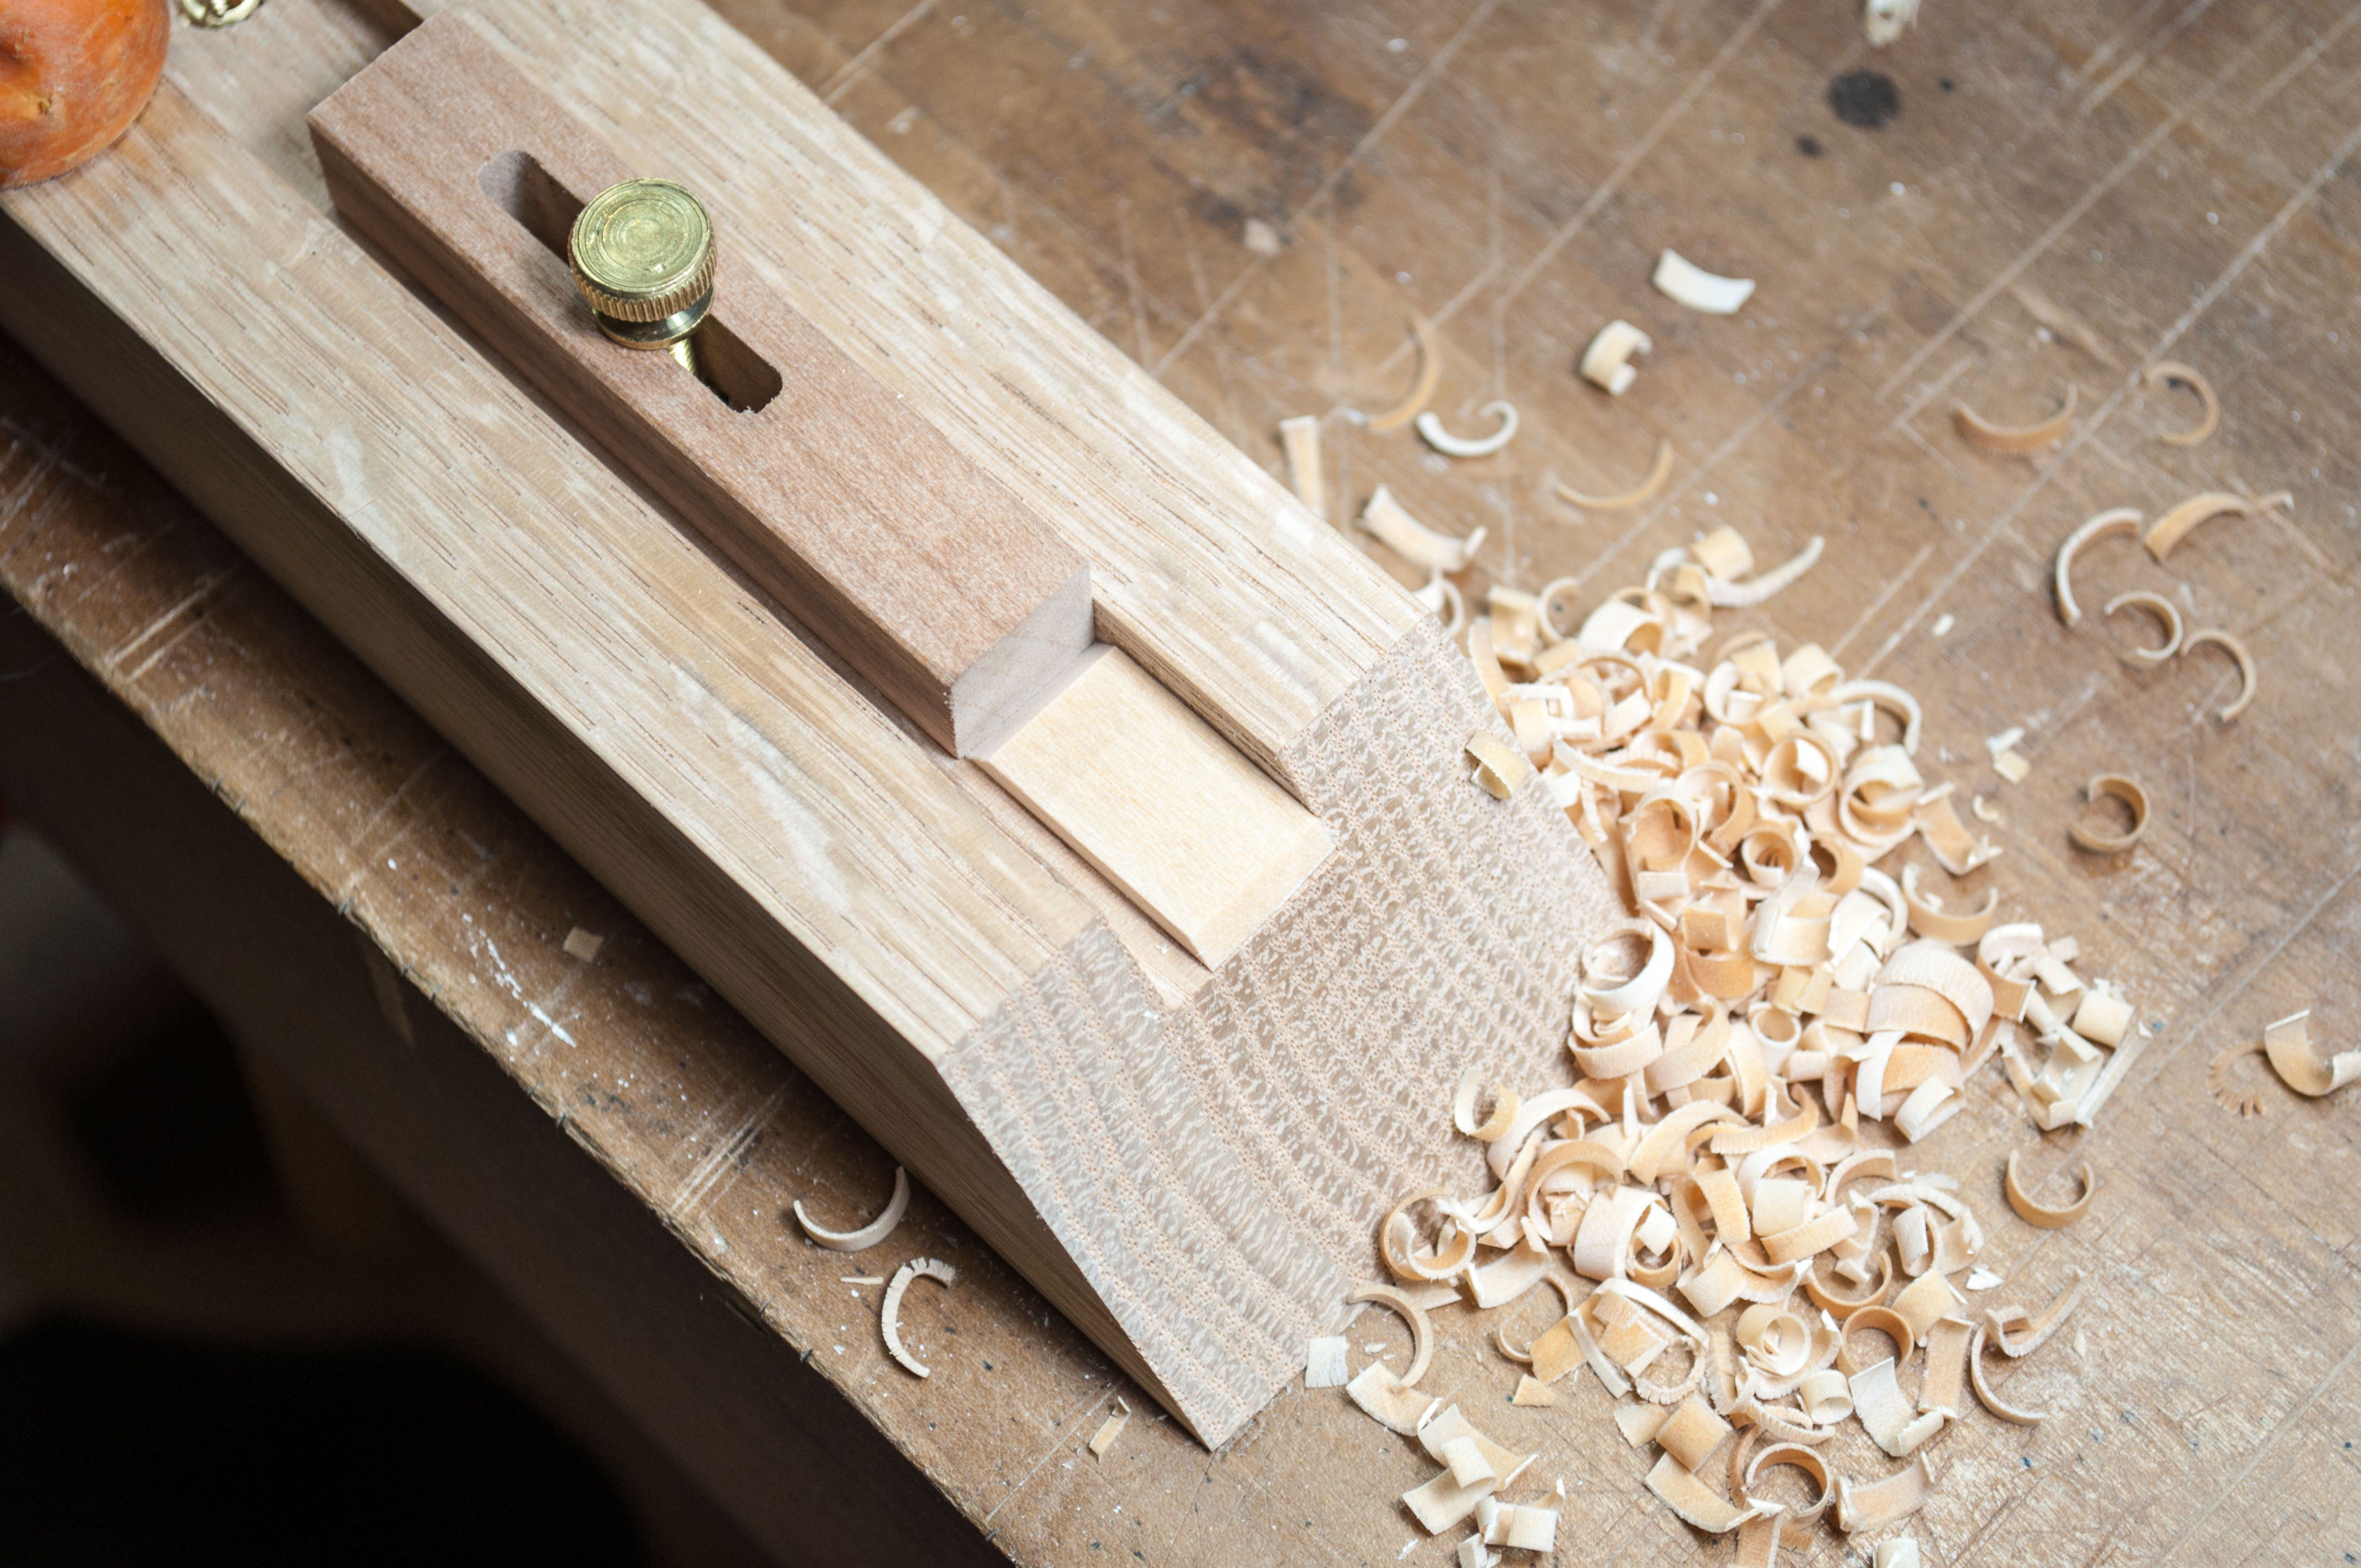 using kumiko jigs - tips for cutting kumiko and problems